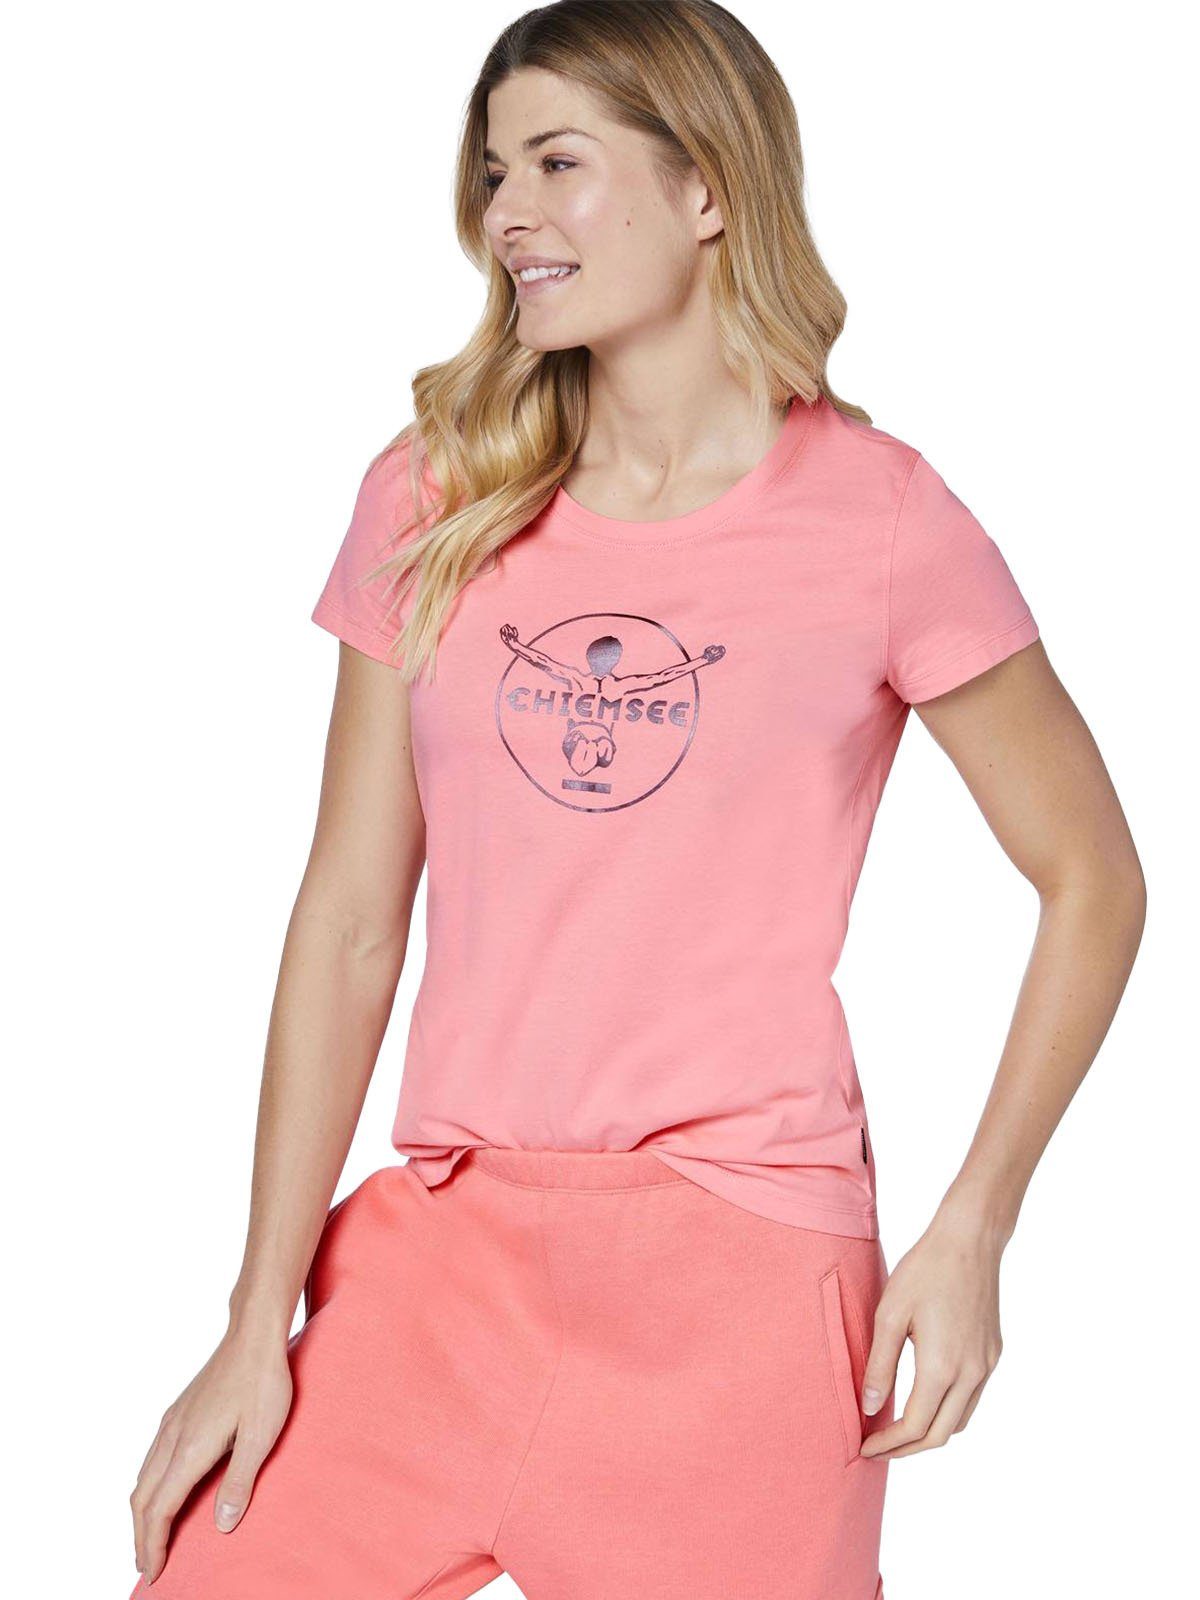 Chiemsee T-Shirt Shirt, Damen T-Shirt Rosa Baumwolle Taormina, 